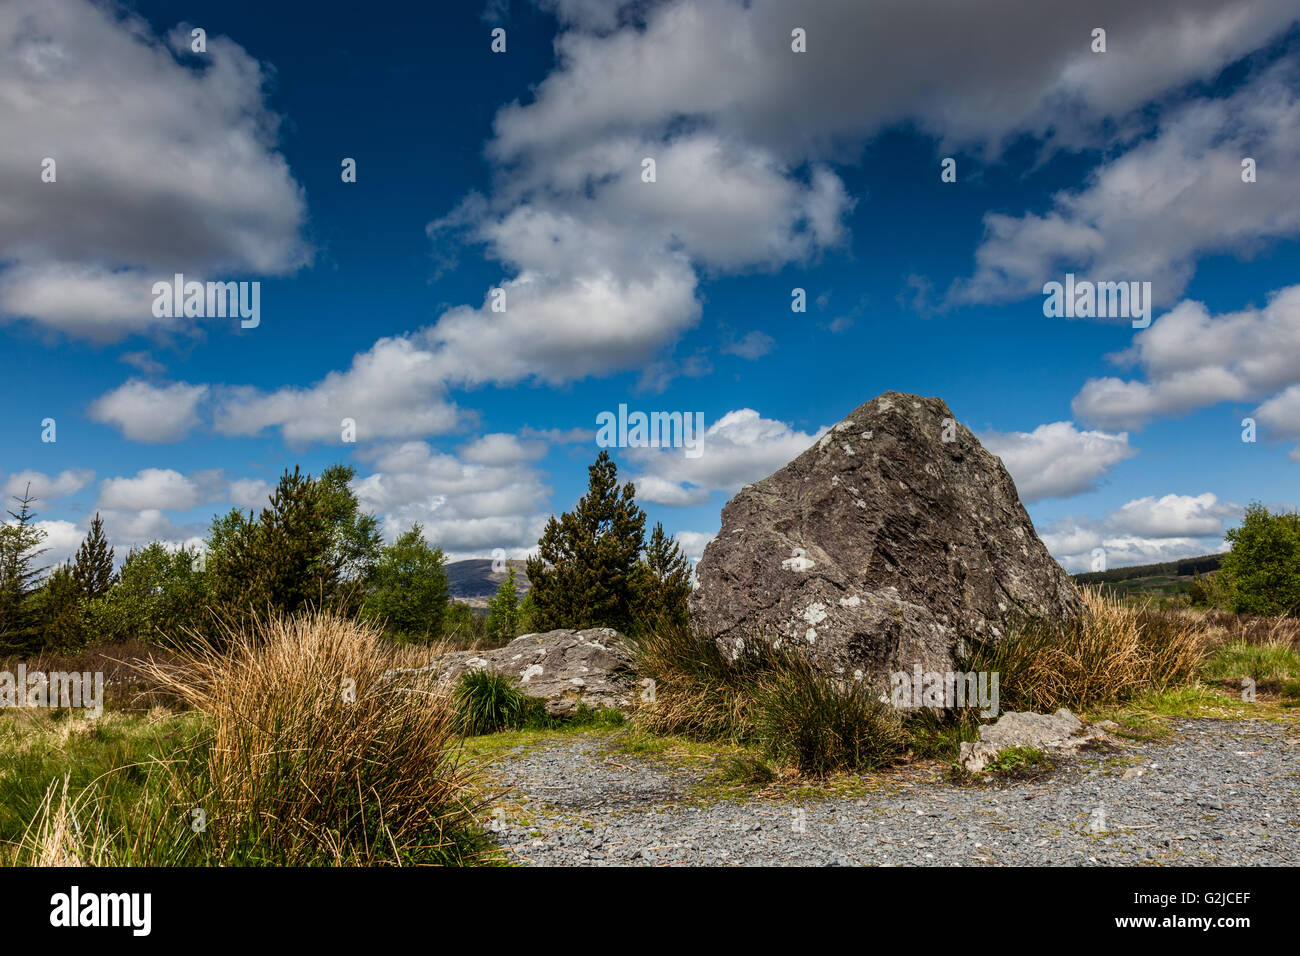 Bruce della pietra, vicino Clatteringshaws Loch, Galloway Forest Park, Dumfries & Galloway, Scozia Foto Stock